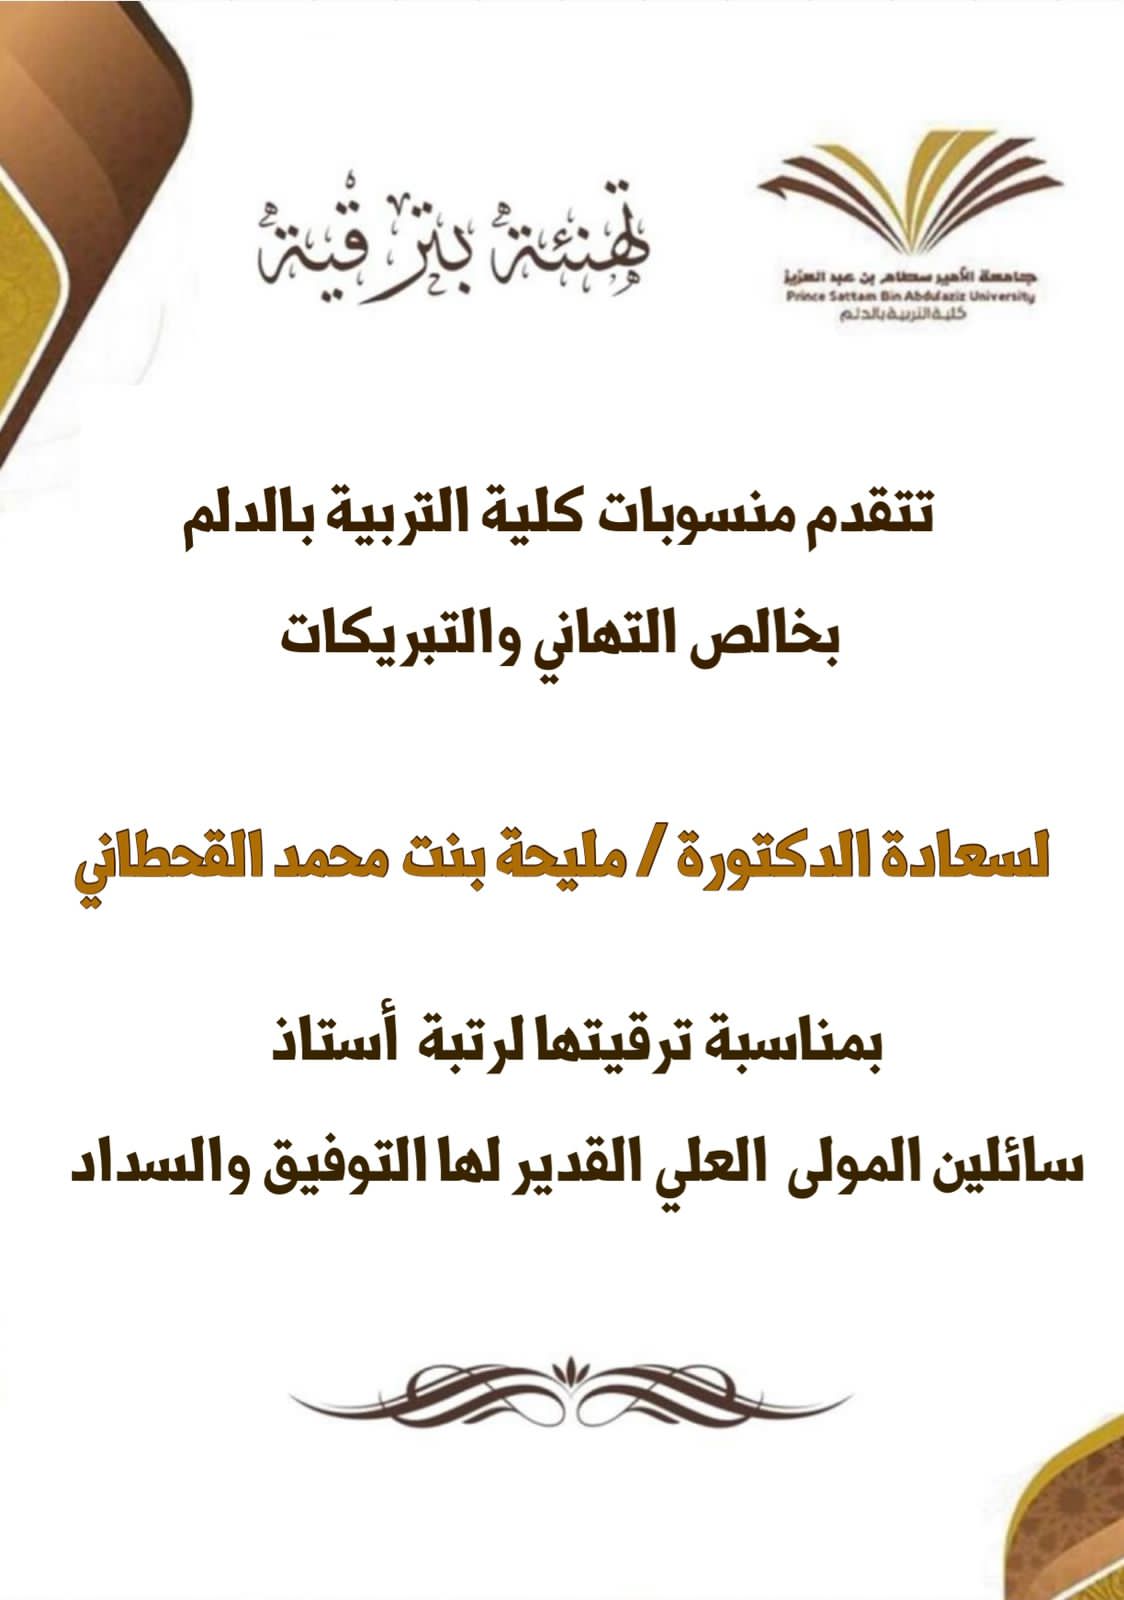 Congratulations to Professor Maleeha Mohamed Al Qahtani